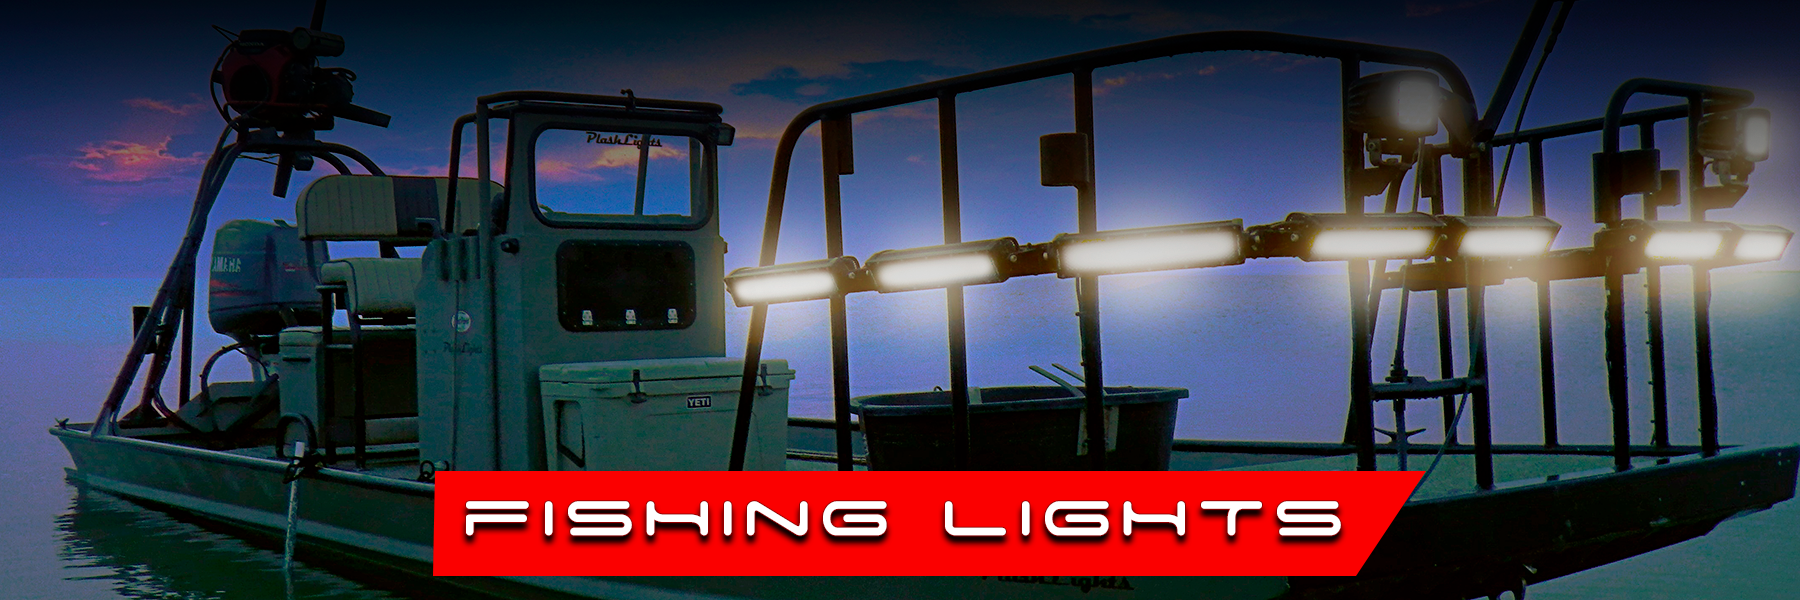 PlashLights XX-Series LED Light Bar World’s Best Marine LED Light Bar marine rated LED low profile light spreader t-top reverse saltwater 